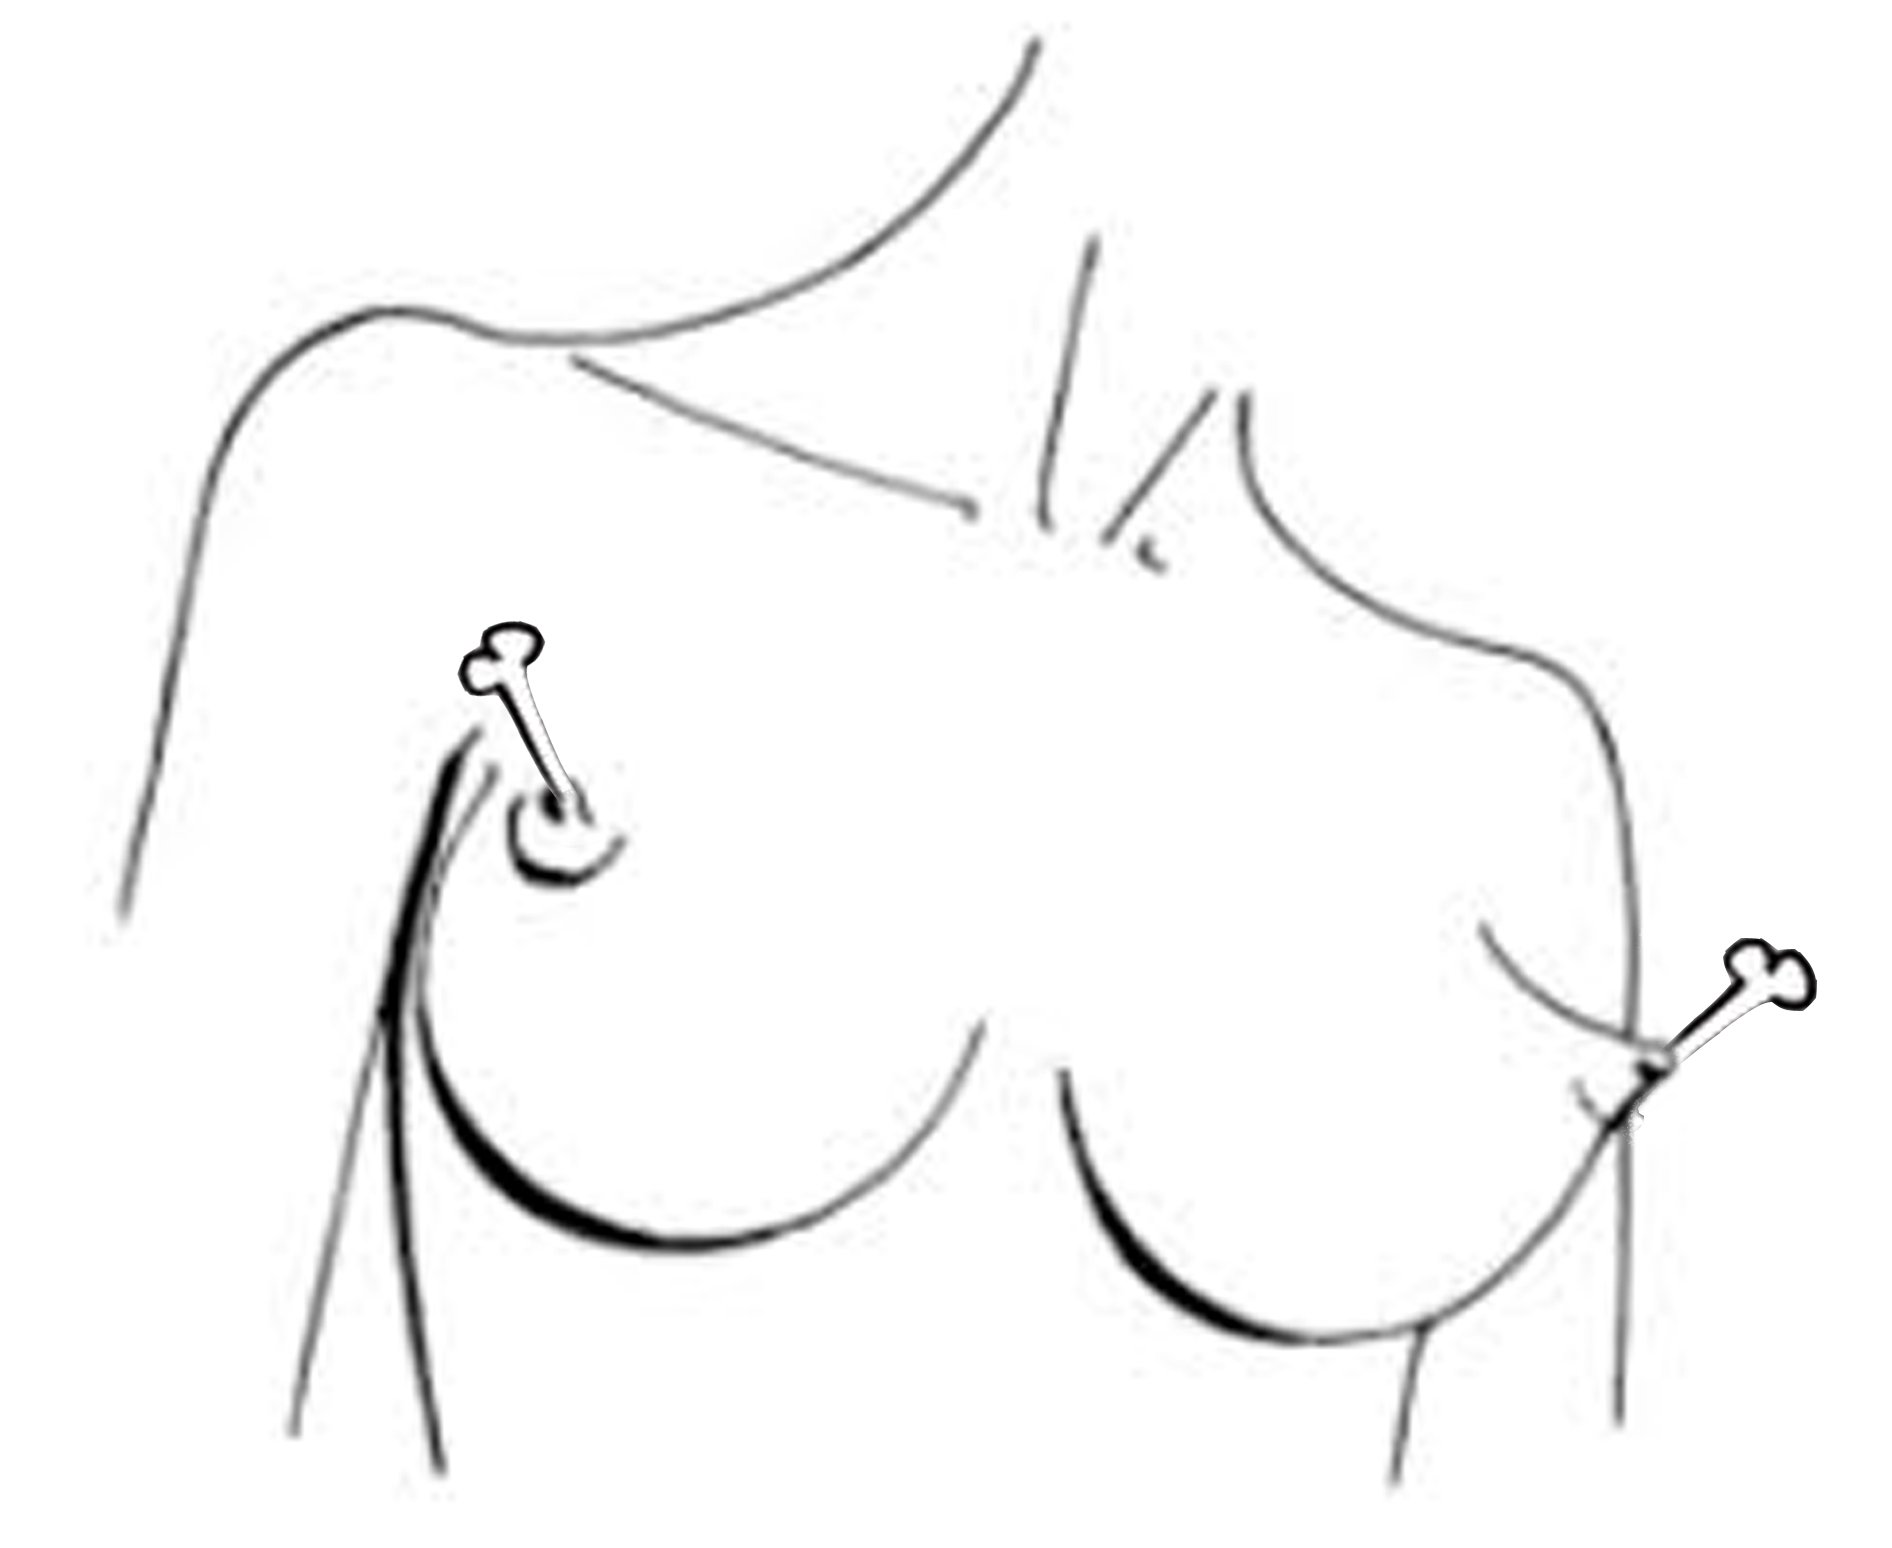 форма груди женщин и ее характер фото 104